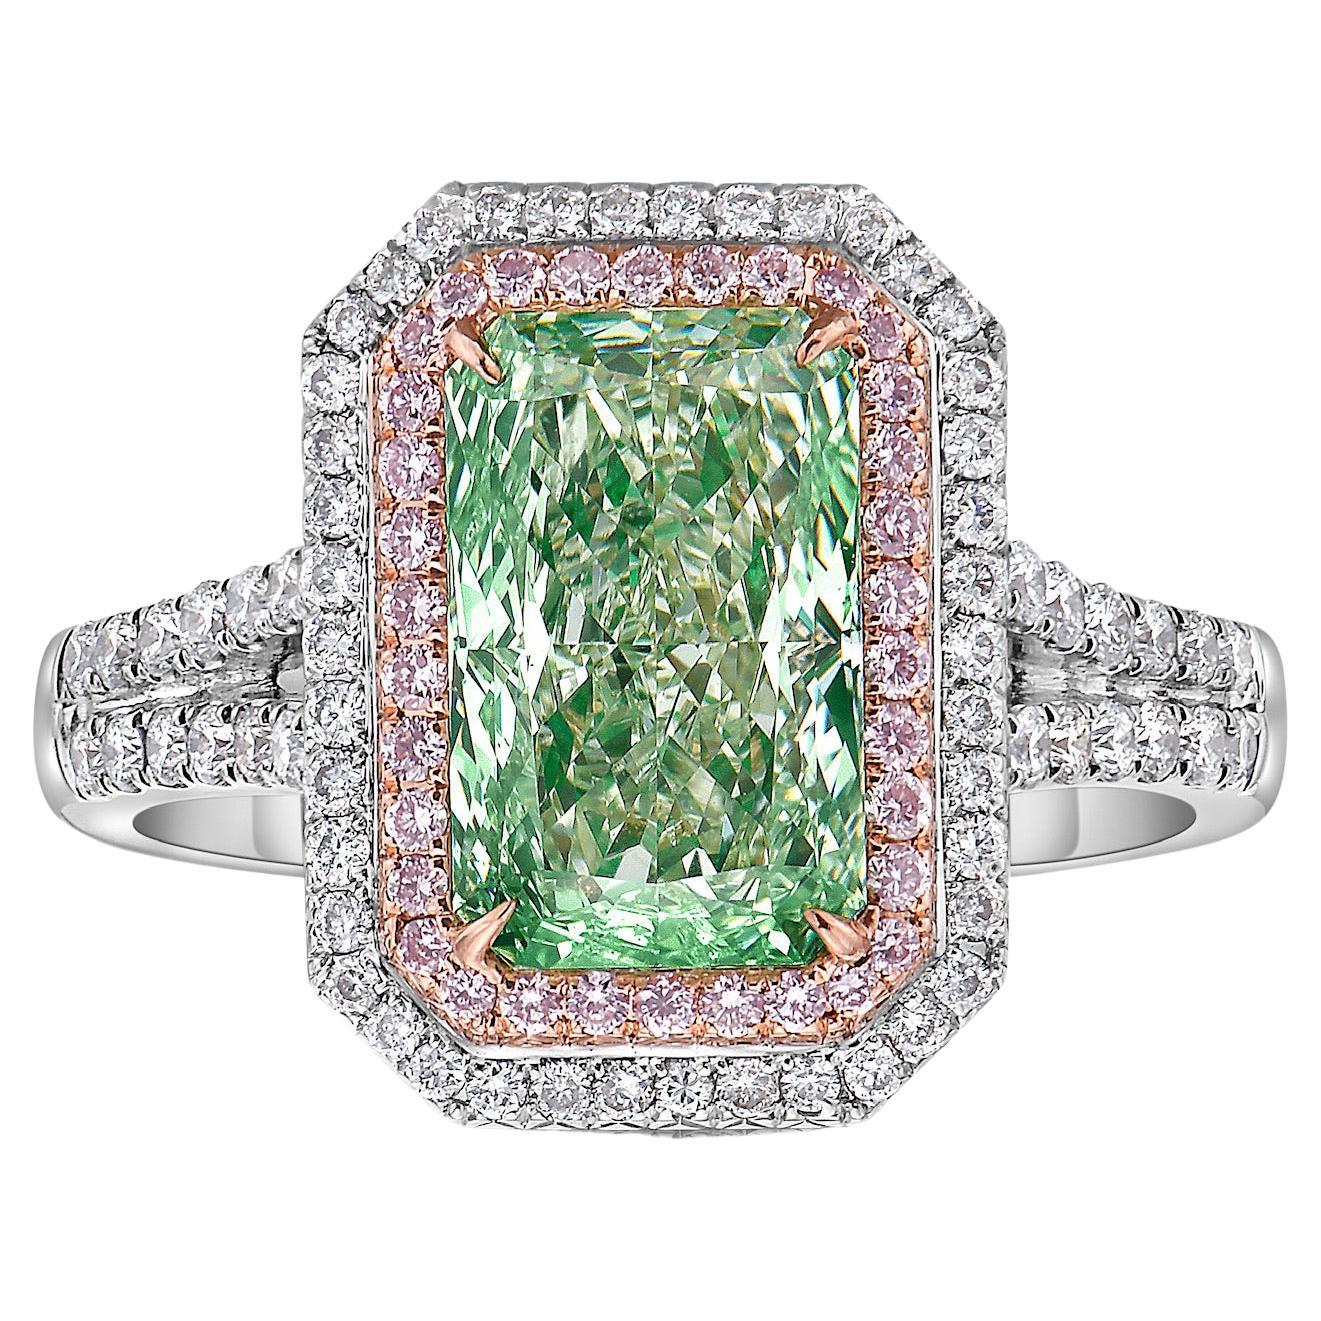 3 Carat Elongated Radiant Green Diamond Ring